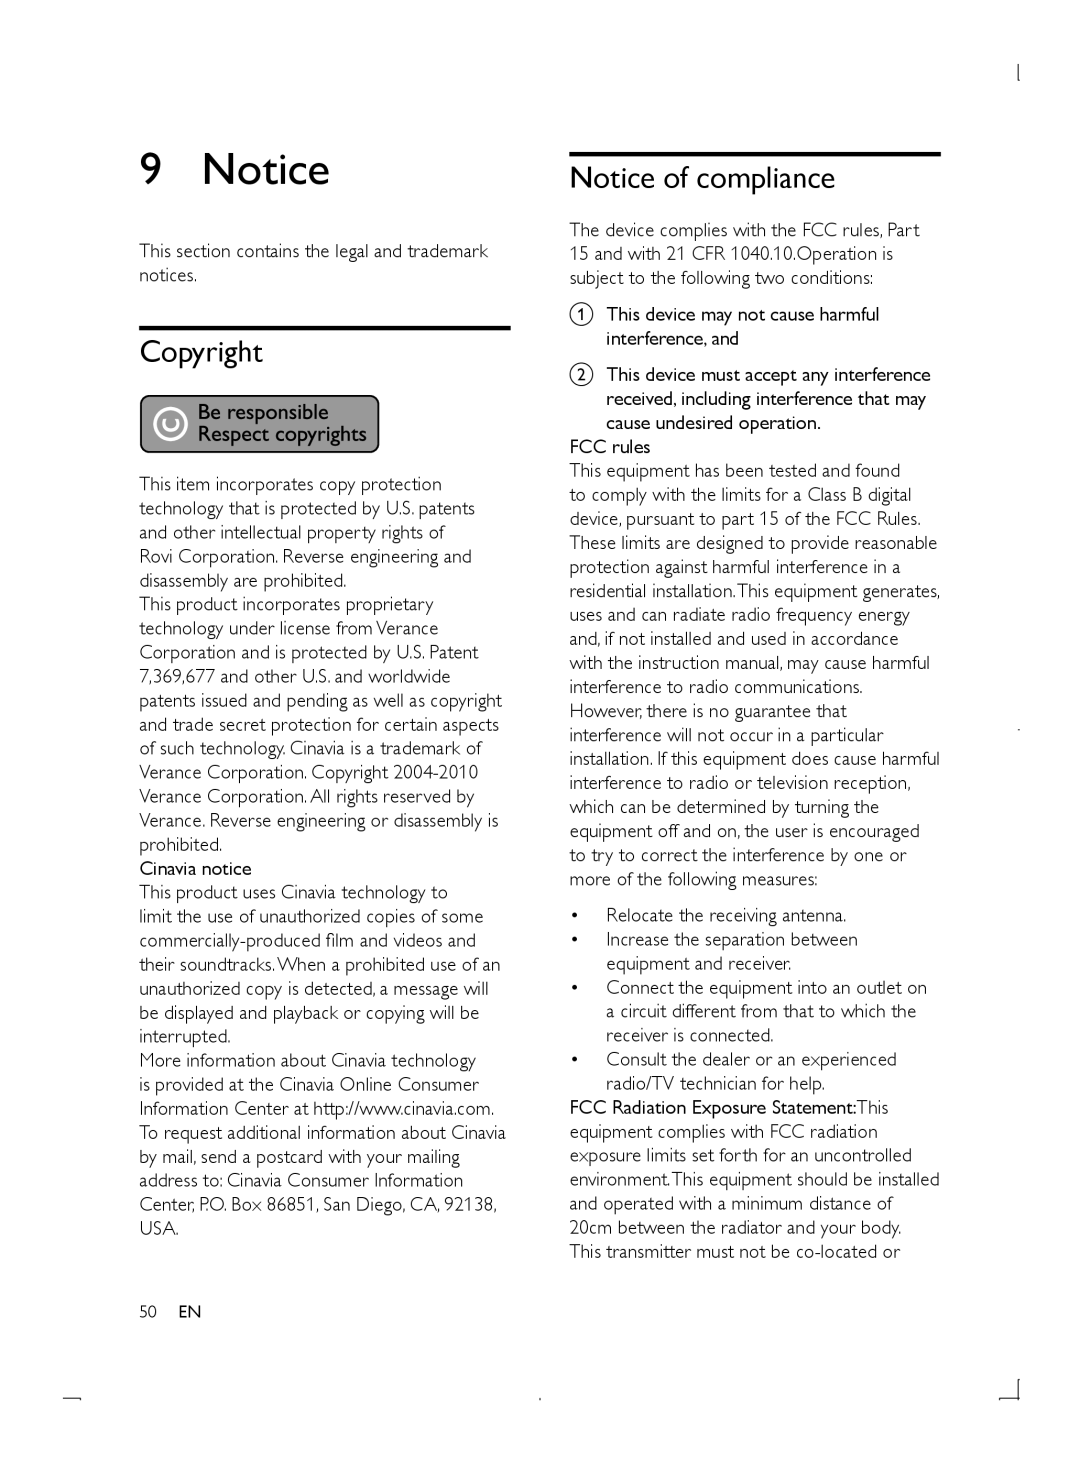 Philips HTB5544D manuel dutilisation Copyright, Notice of compliance 